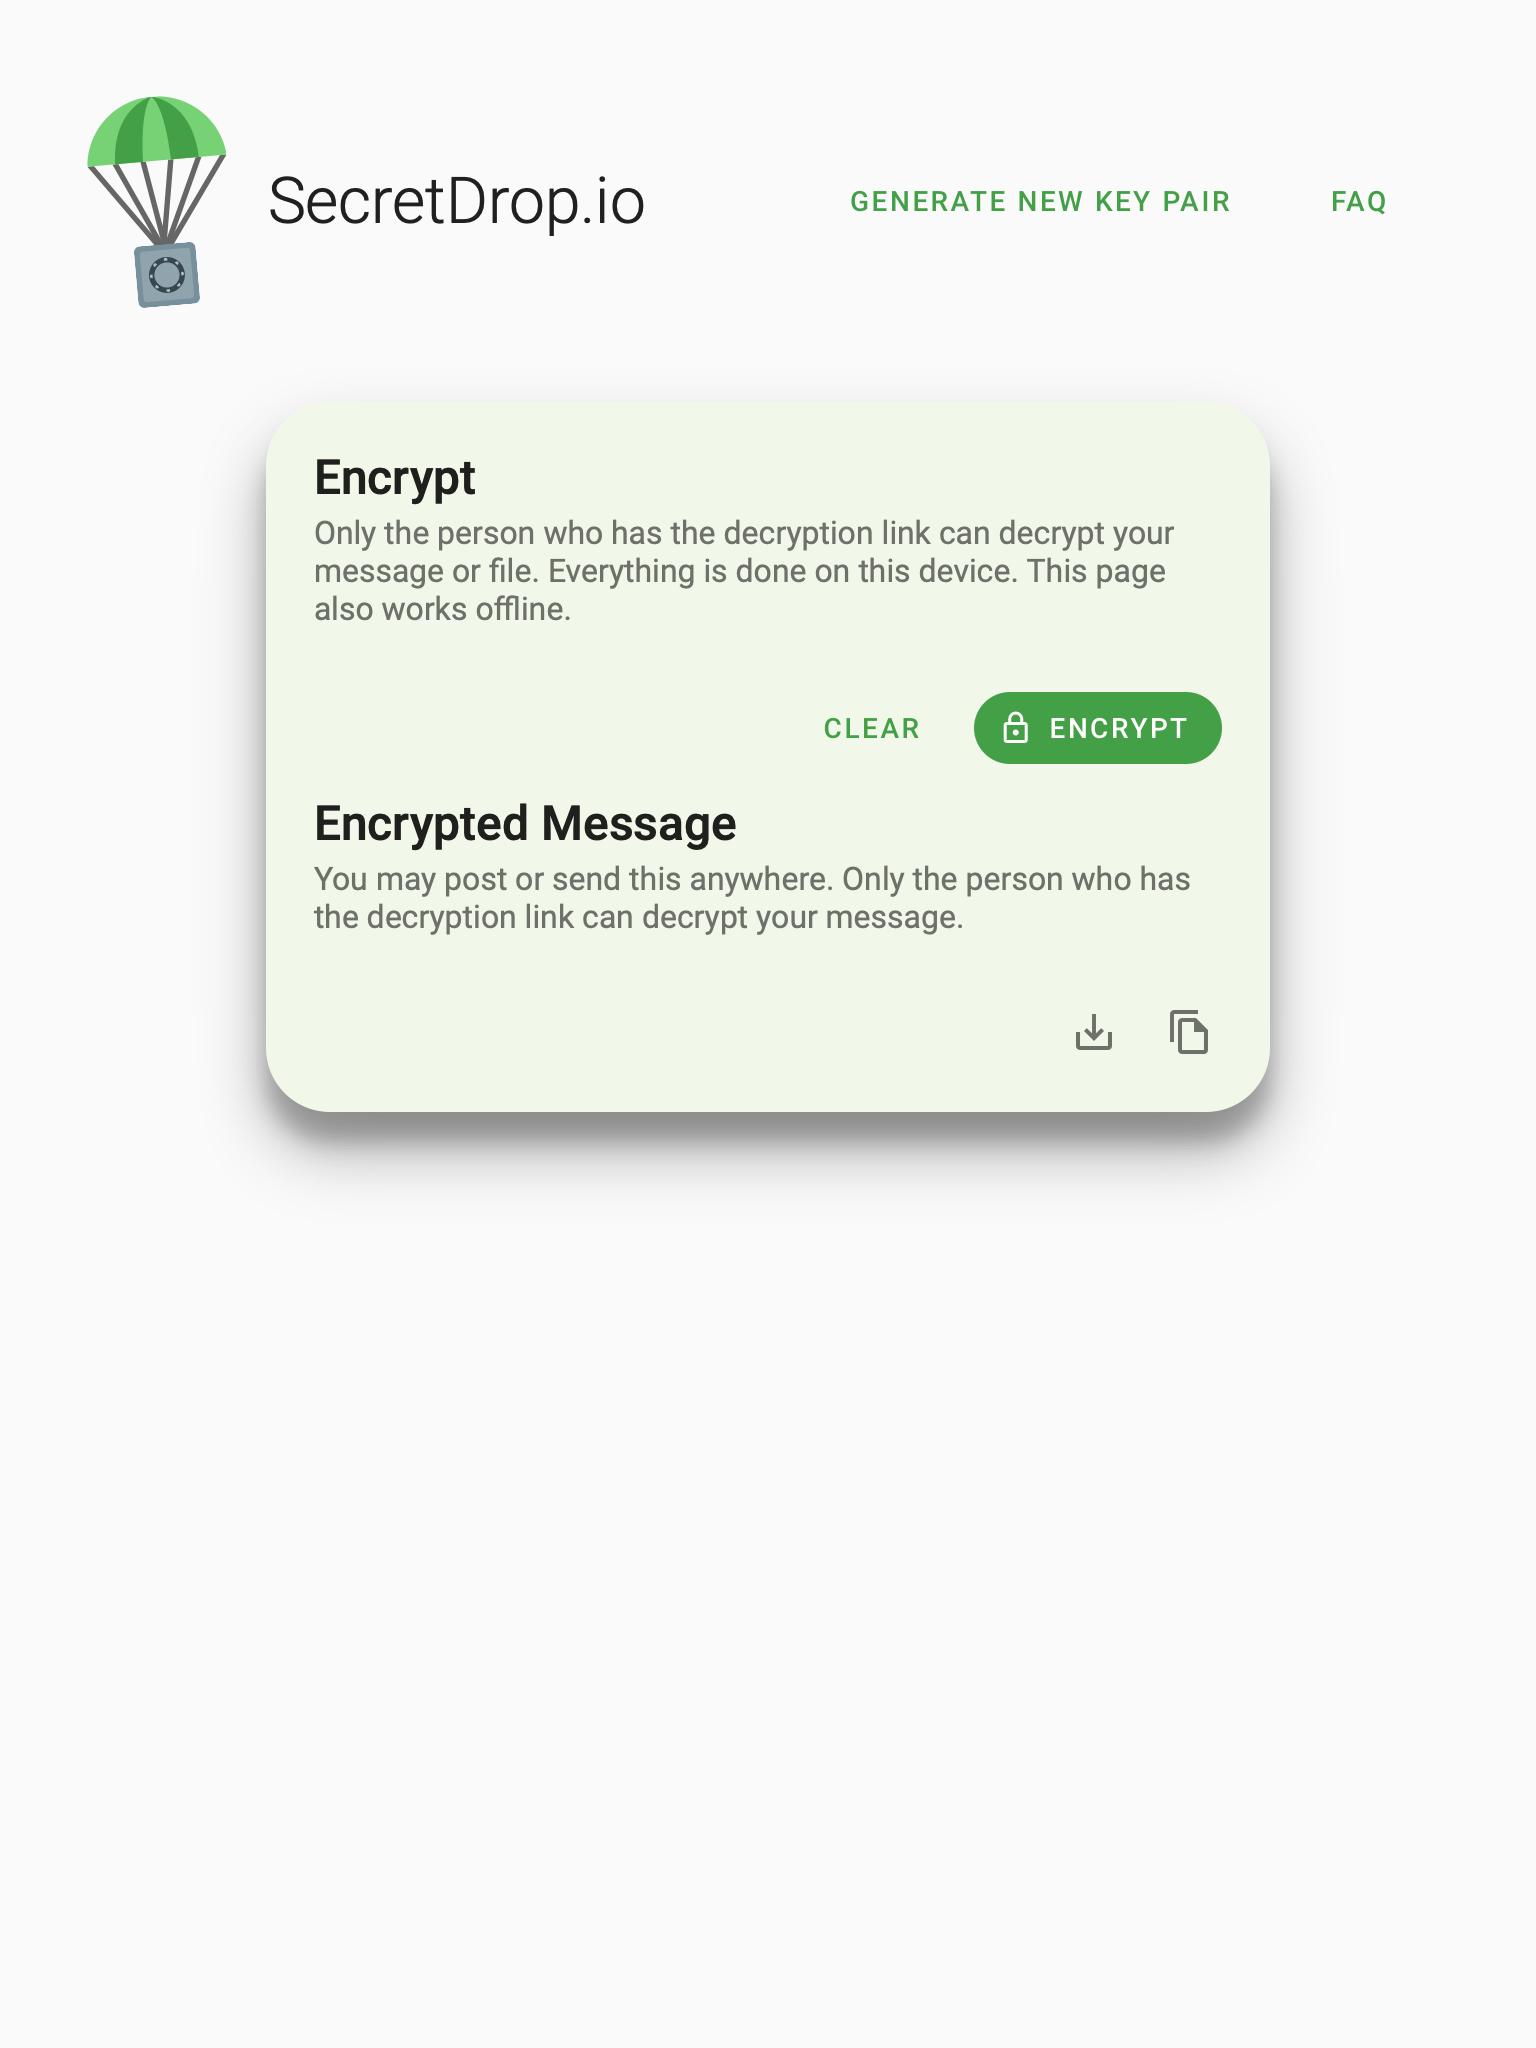 main-test-ts-encrypt-decrypt-encrypt-page-text-encryption-screenshot-768-1024-0-snap.png